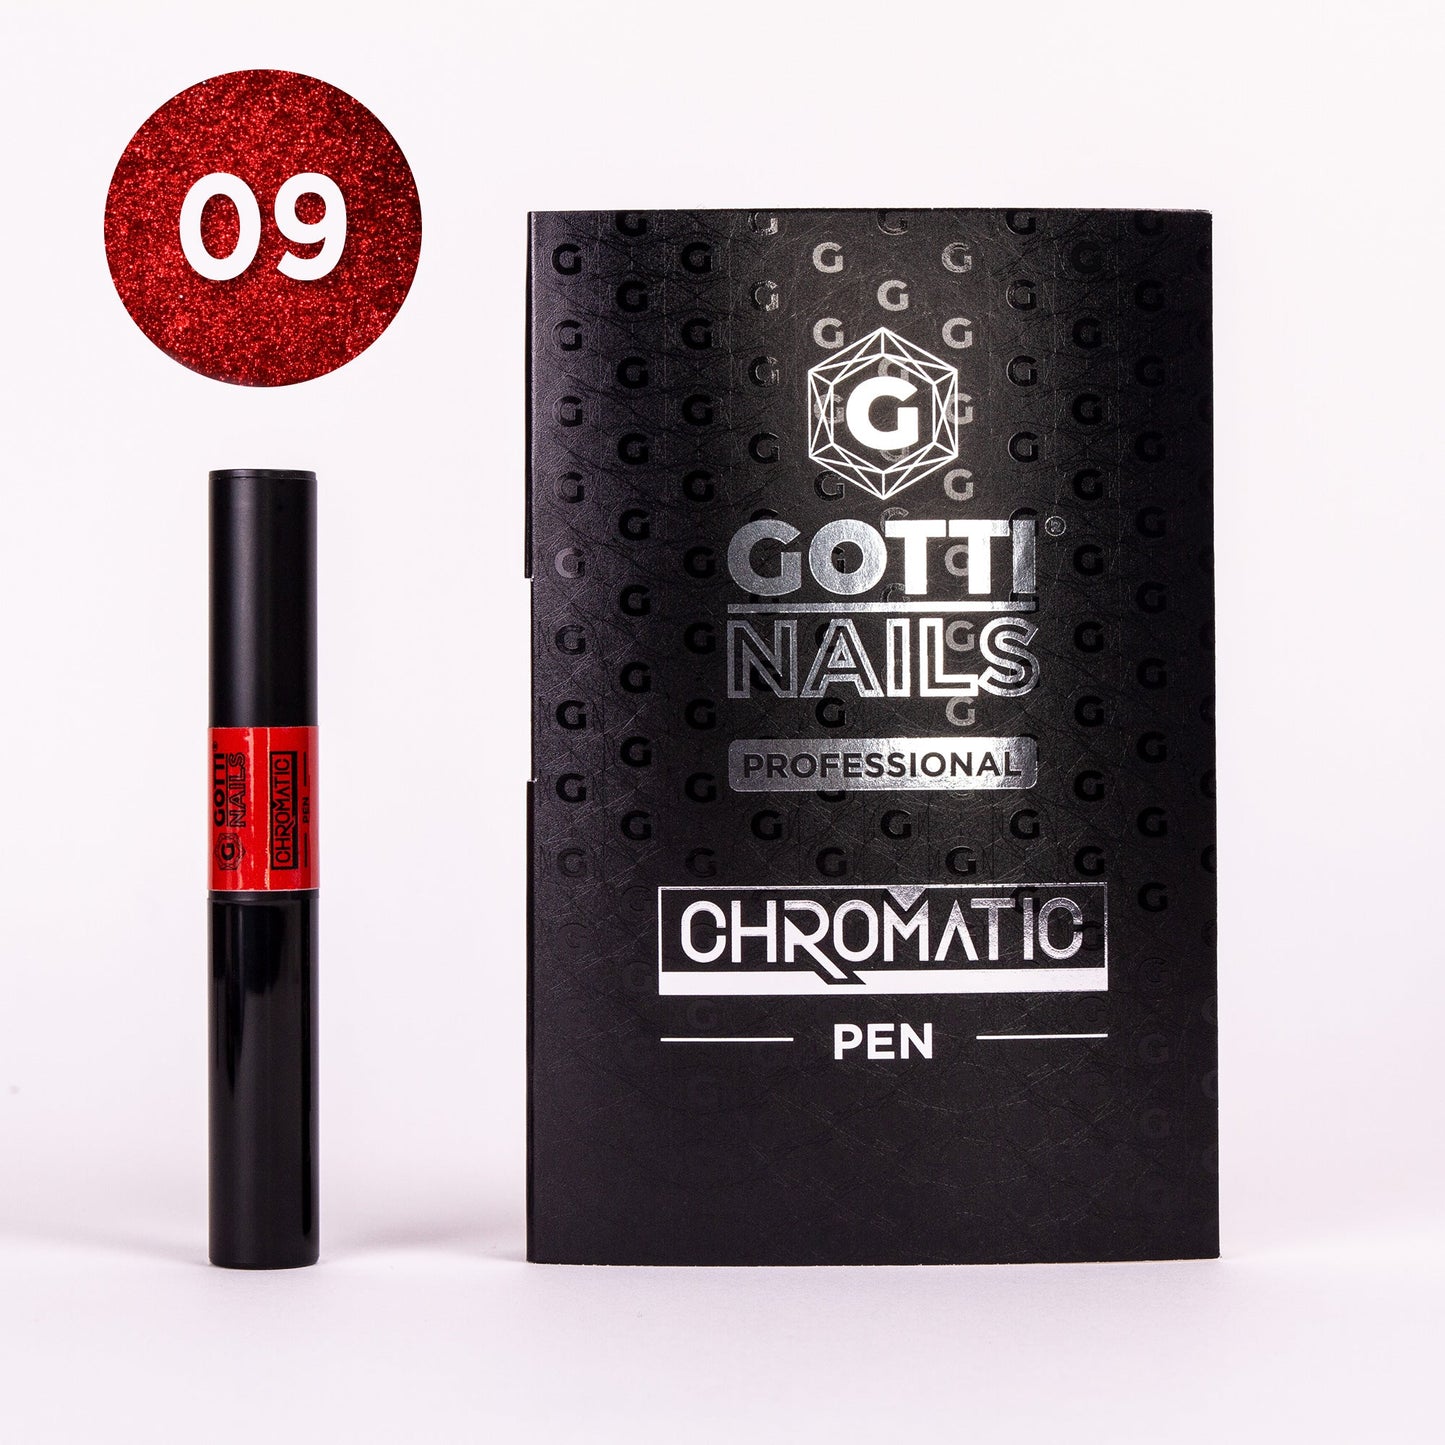 Chromatic Pen by Gotti Nails